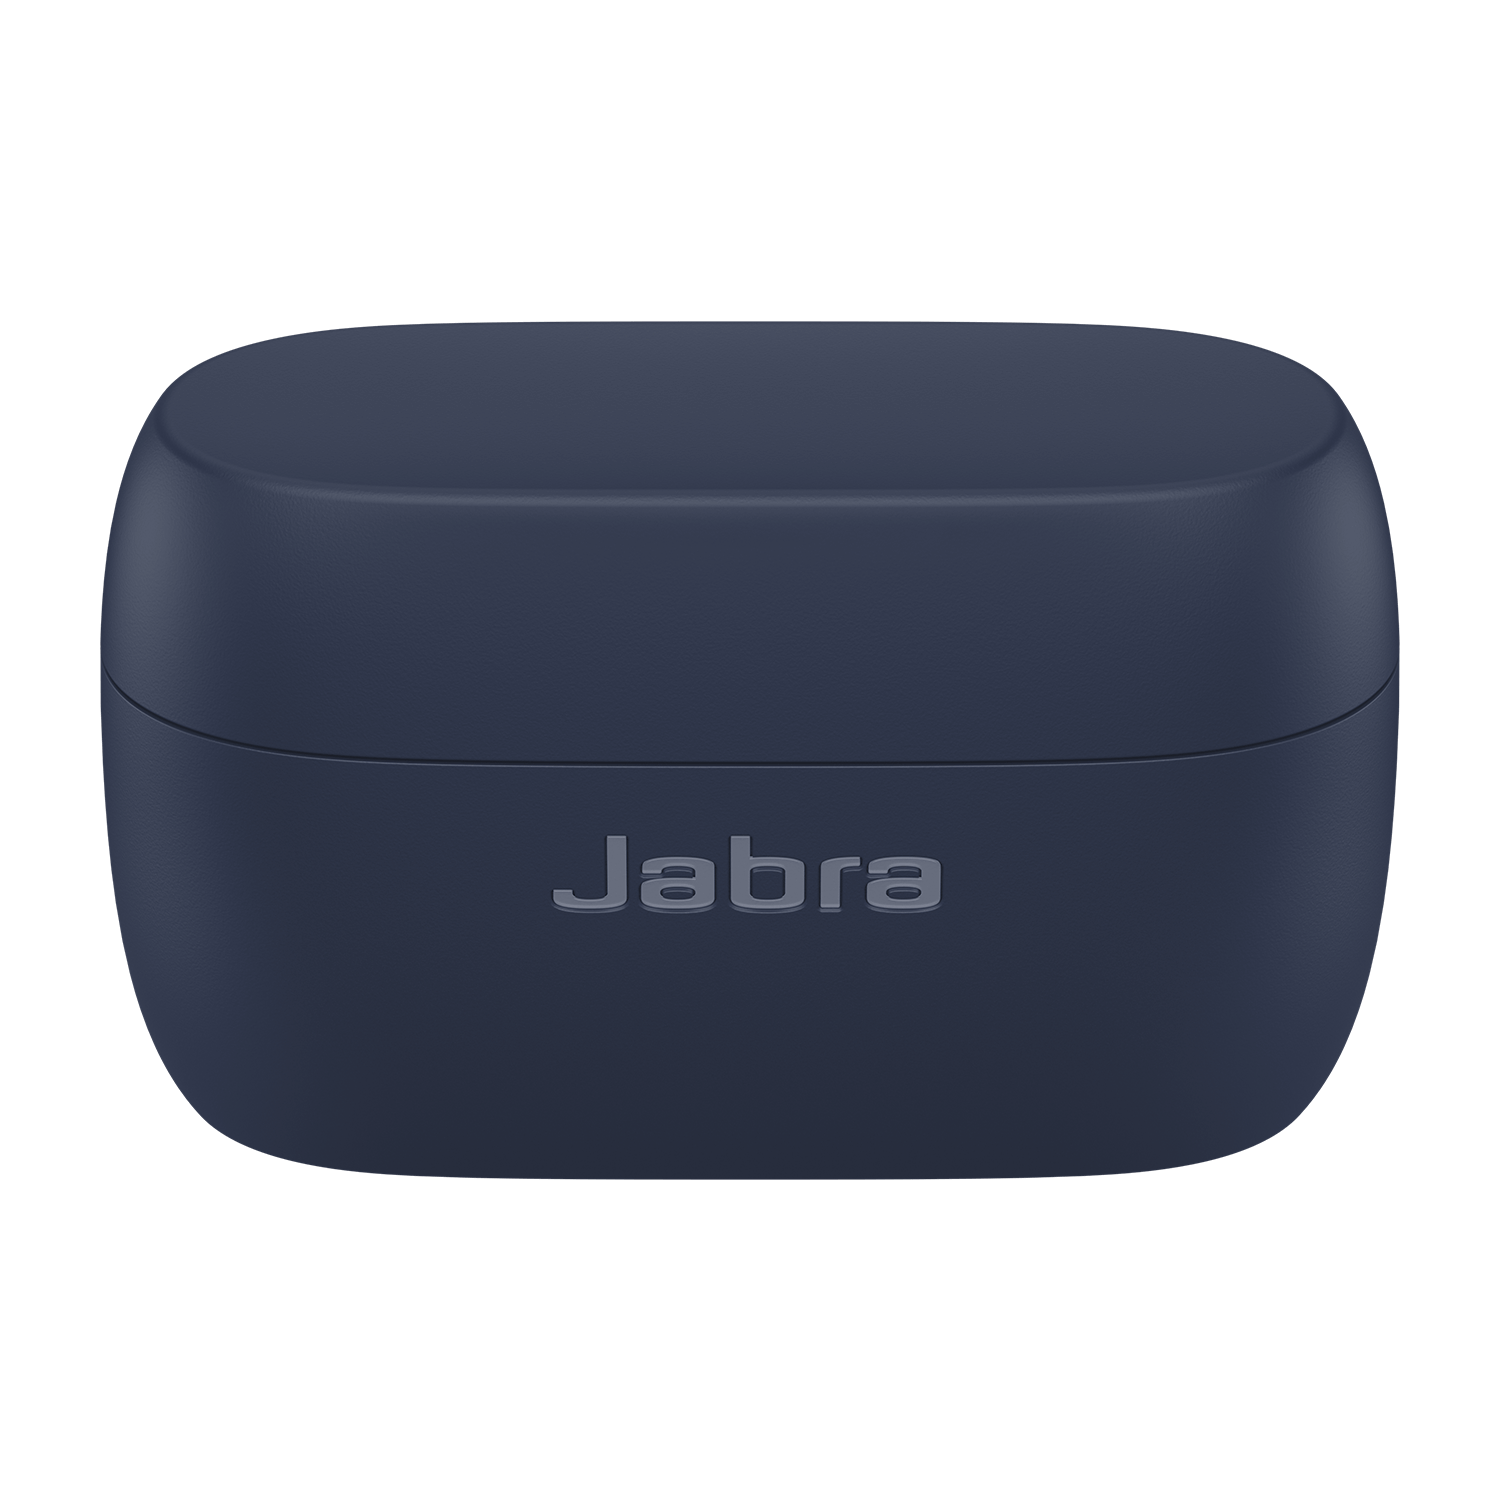 Jabra Elite Active 75t Wireless Charging Case - Navy